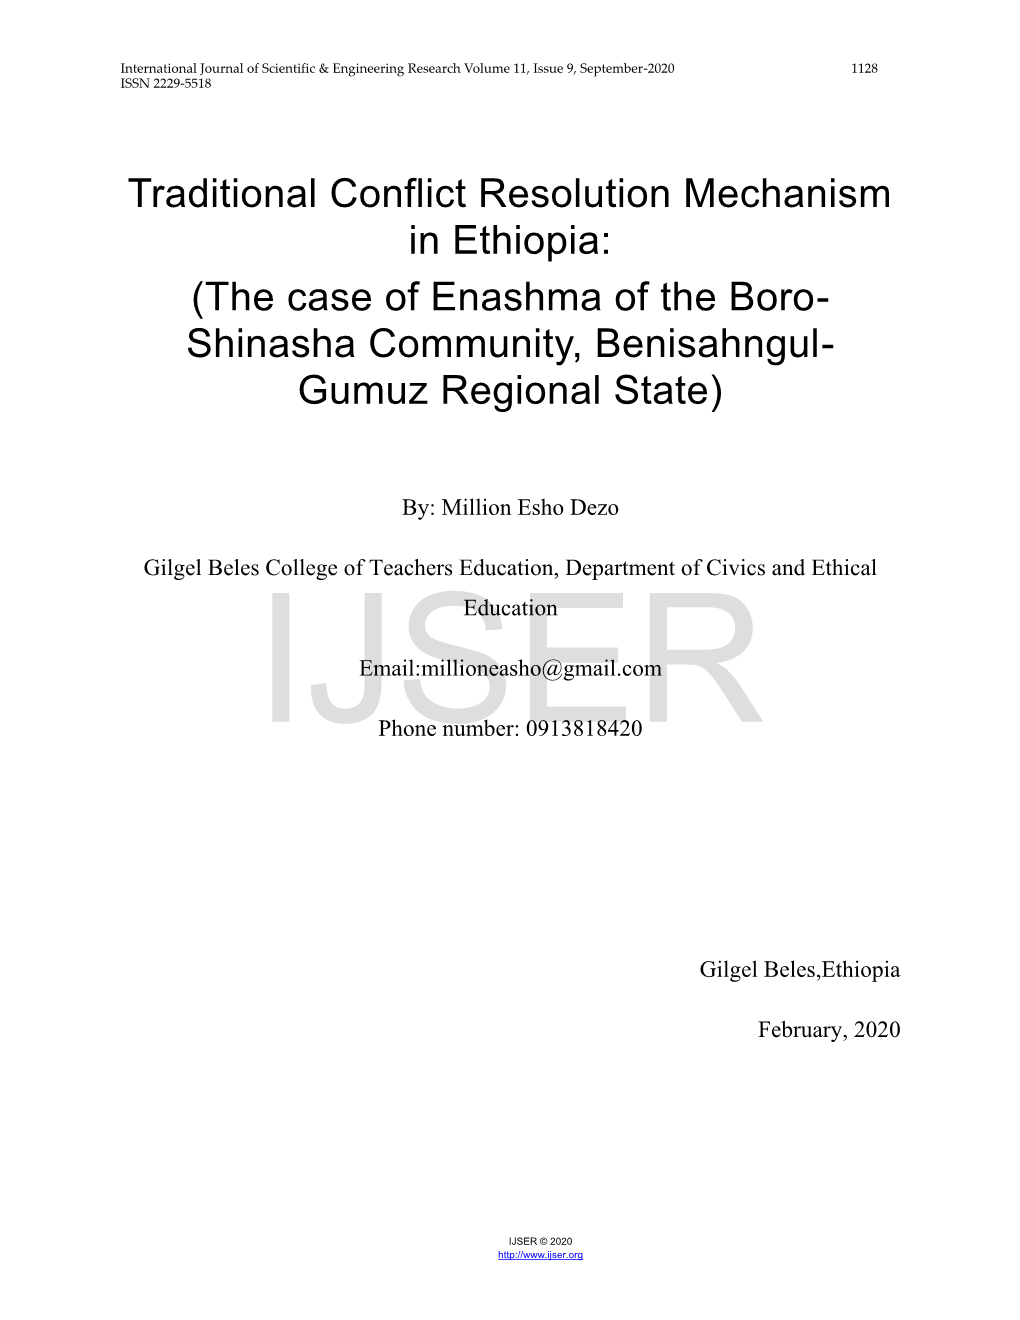 Traditional Conflict Resolution Mechanism in Ethiopia: (The Case of Enashma of the Boro- Shinasha Community, Benisahngul- Gumuz Regional State)